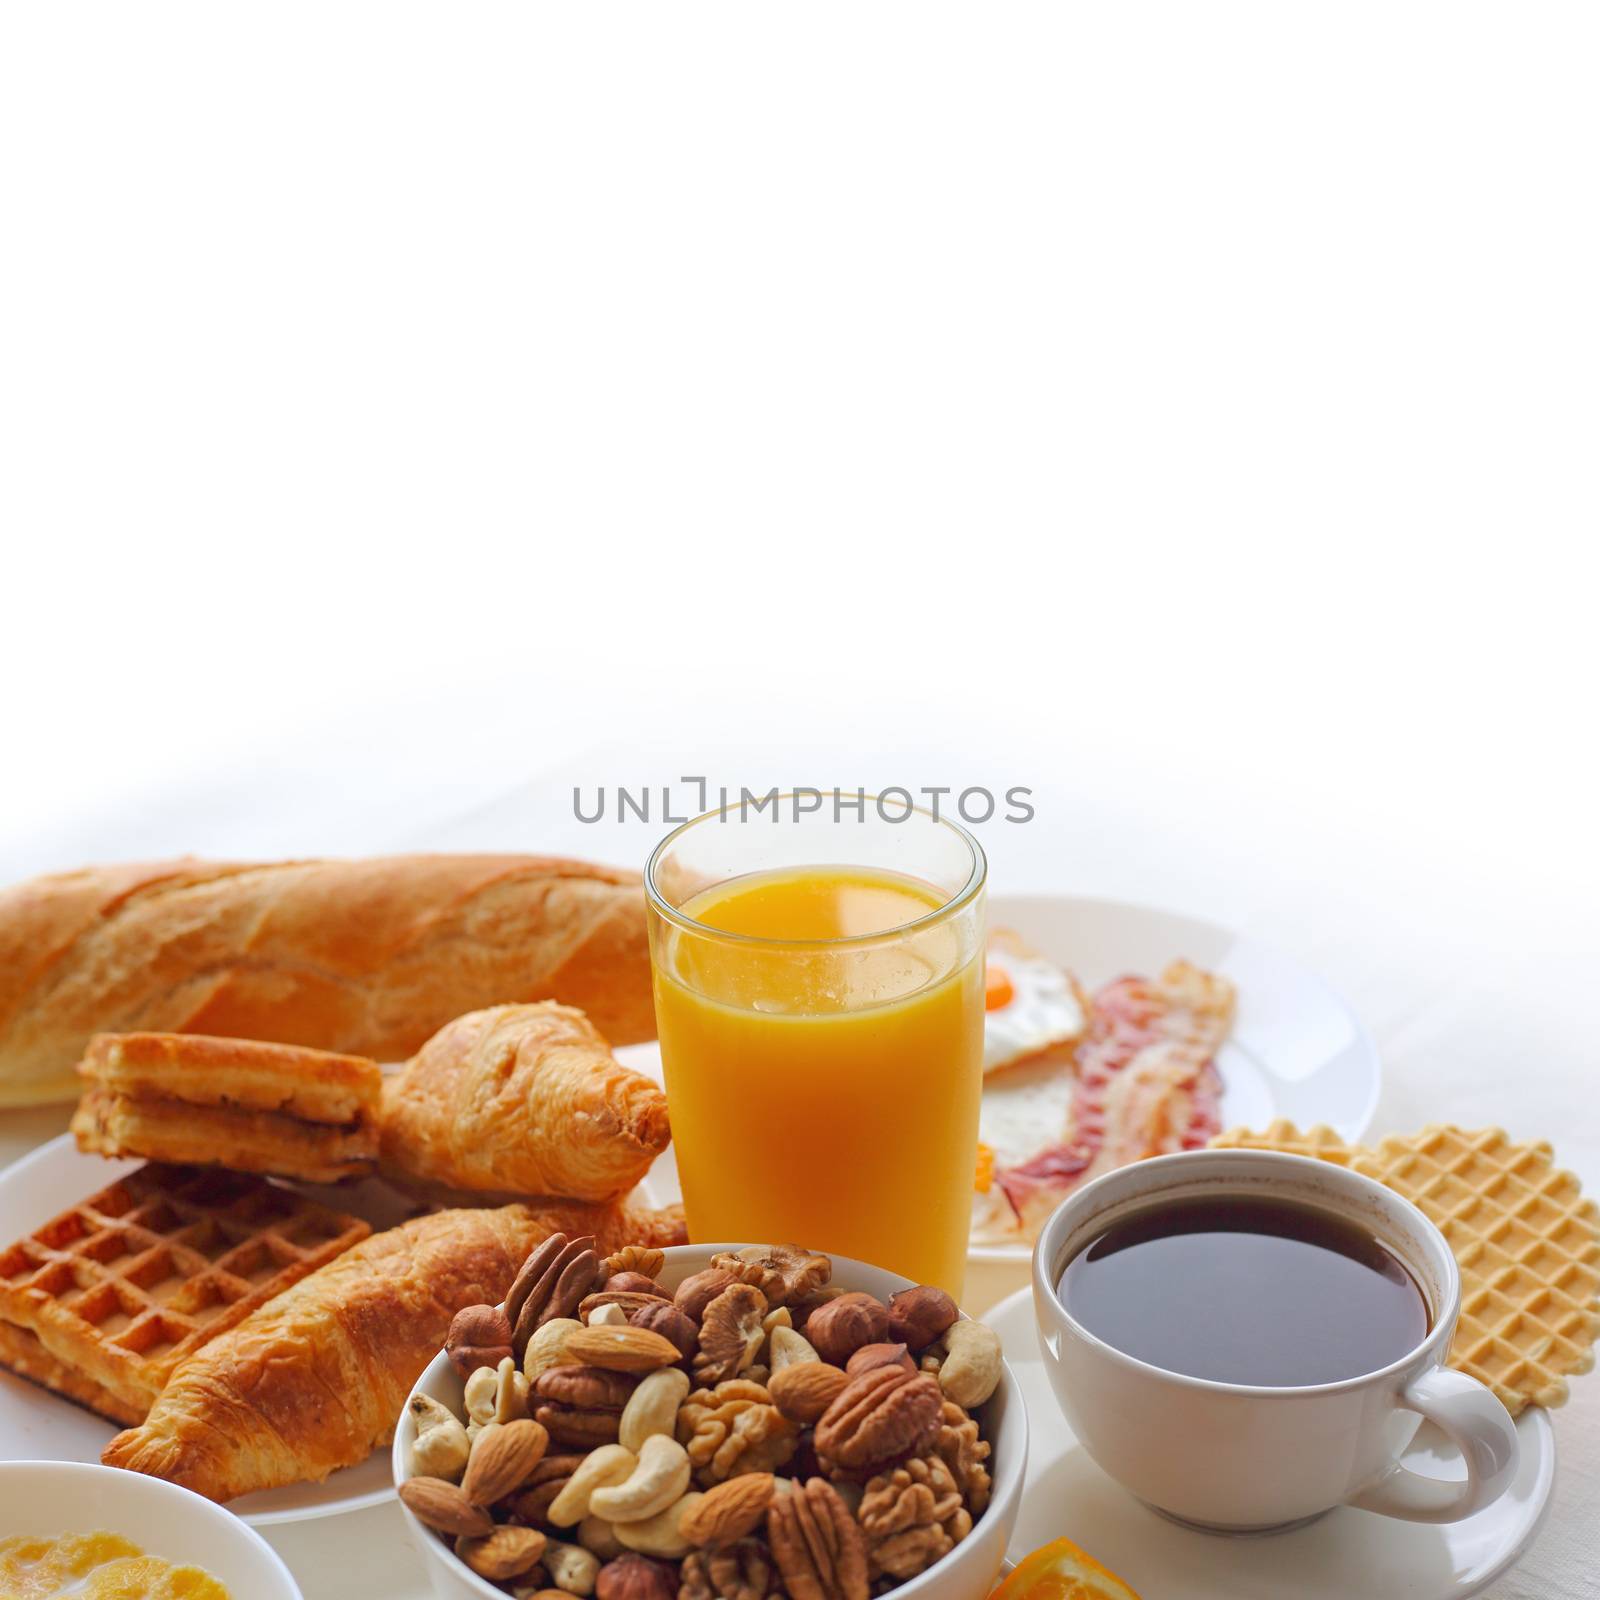 Healthy breakfast background by destillat